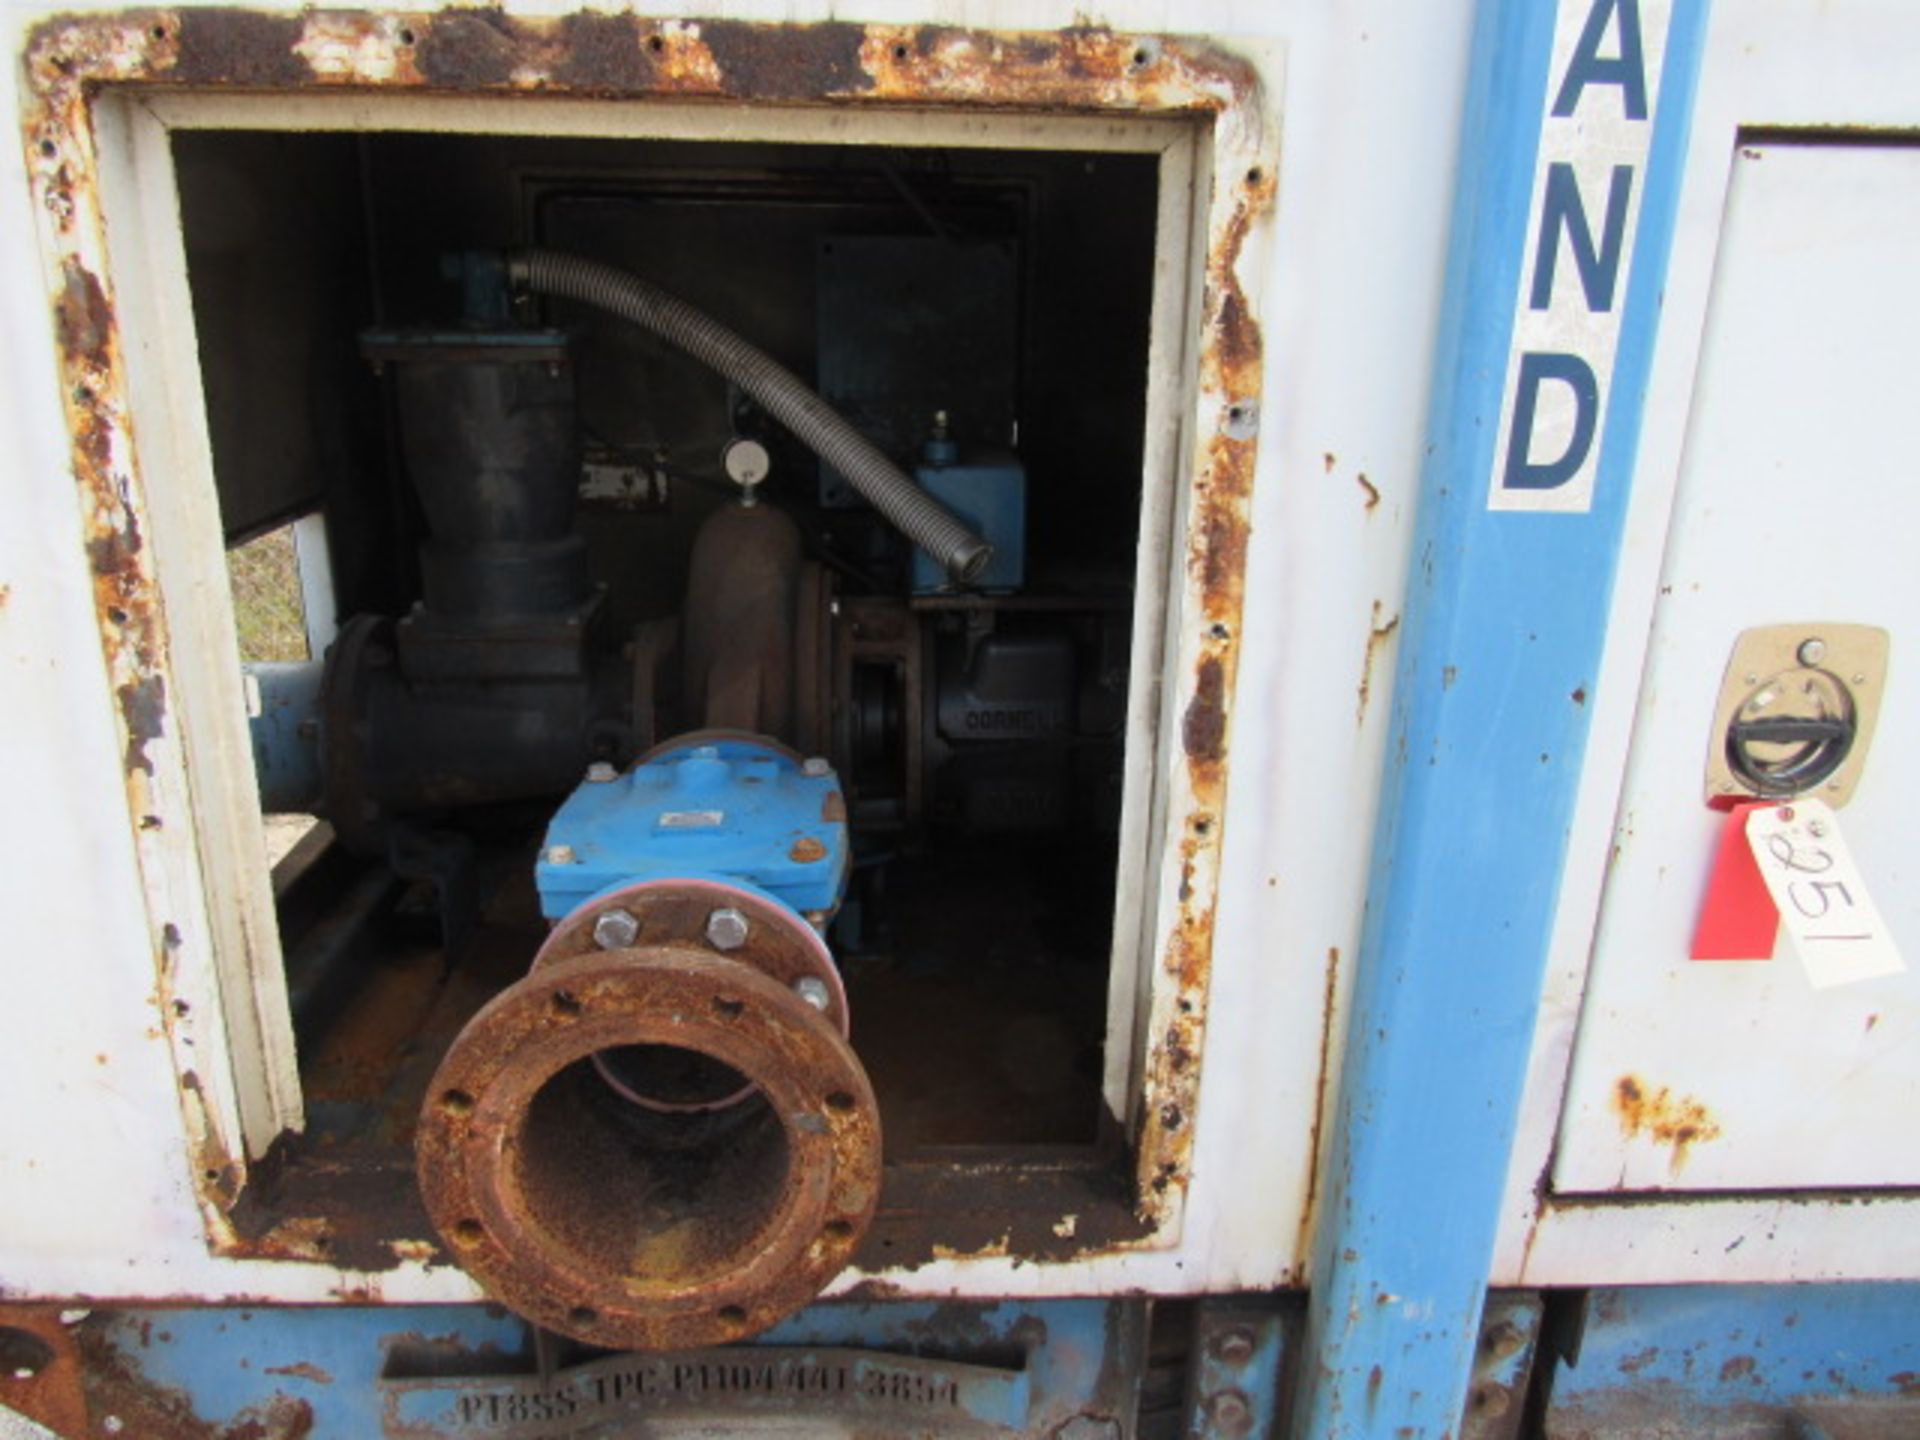 Holland SS - PT8TPC - Perkins - 1104.44T 8'' Diesel Super Silent Suction / Trash Pump - Image 2 of 7